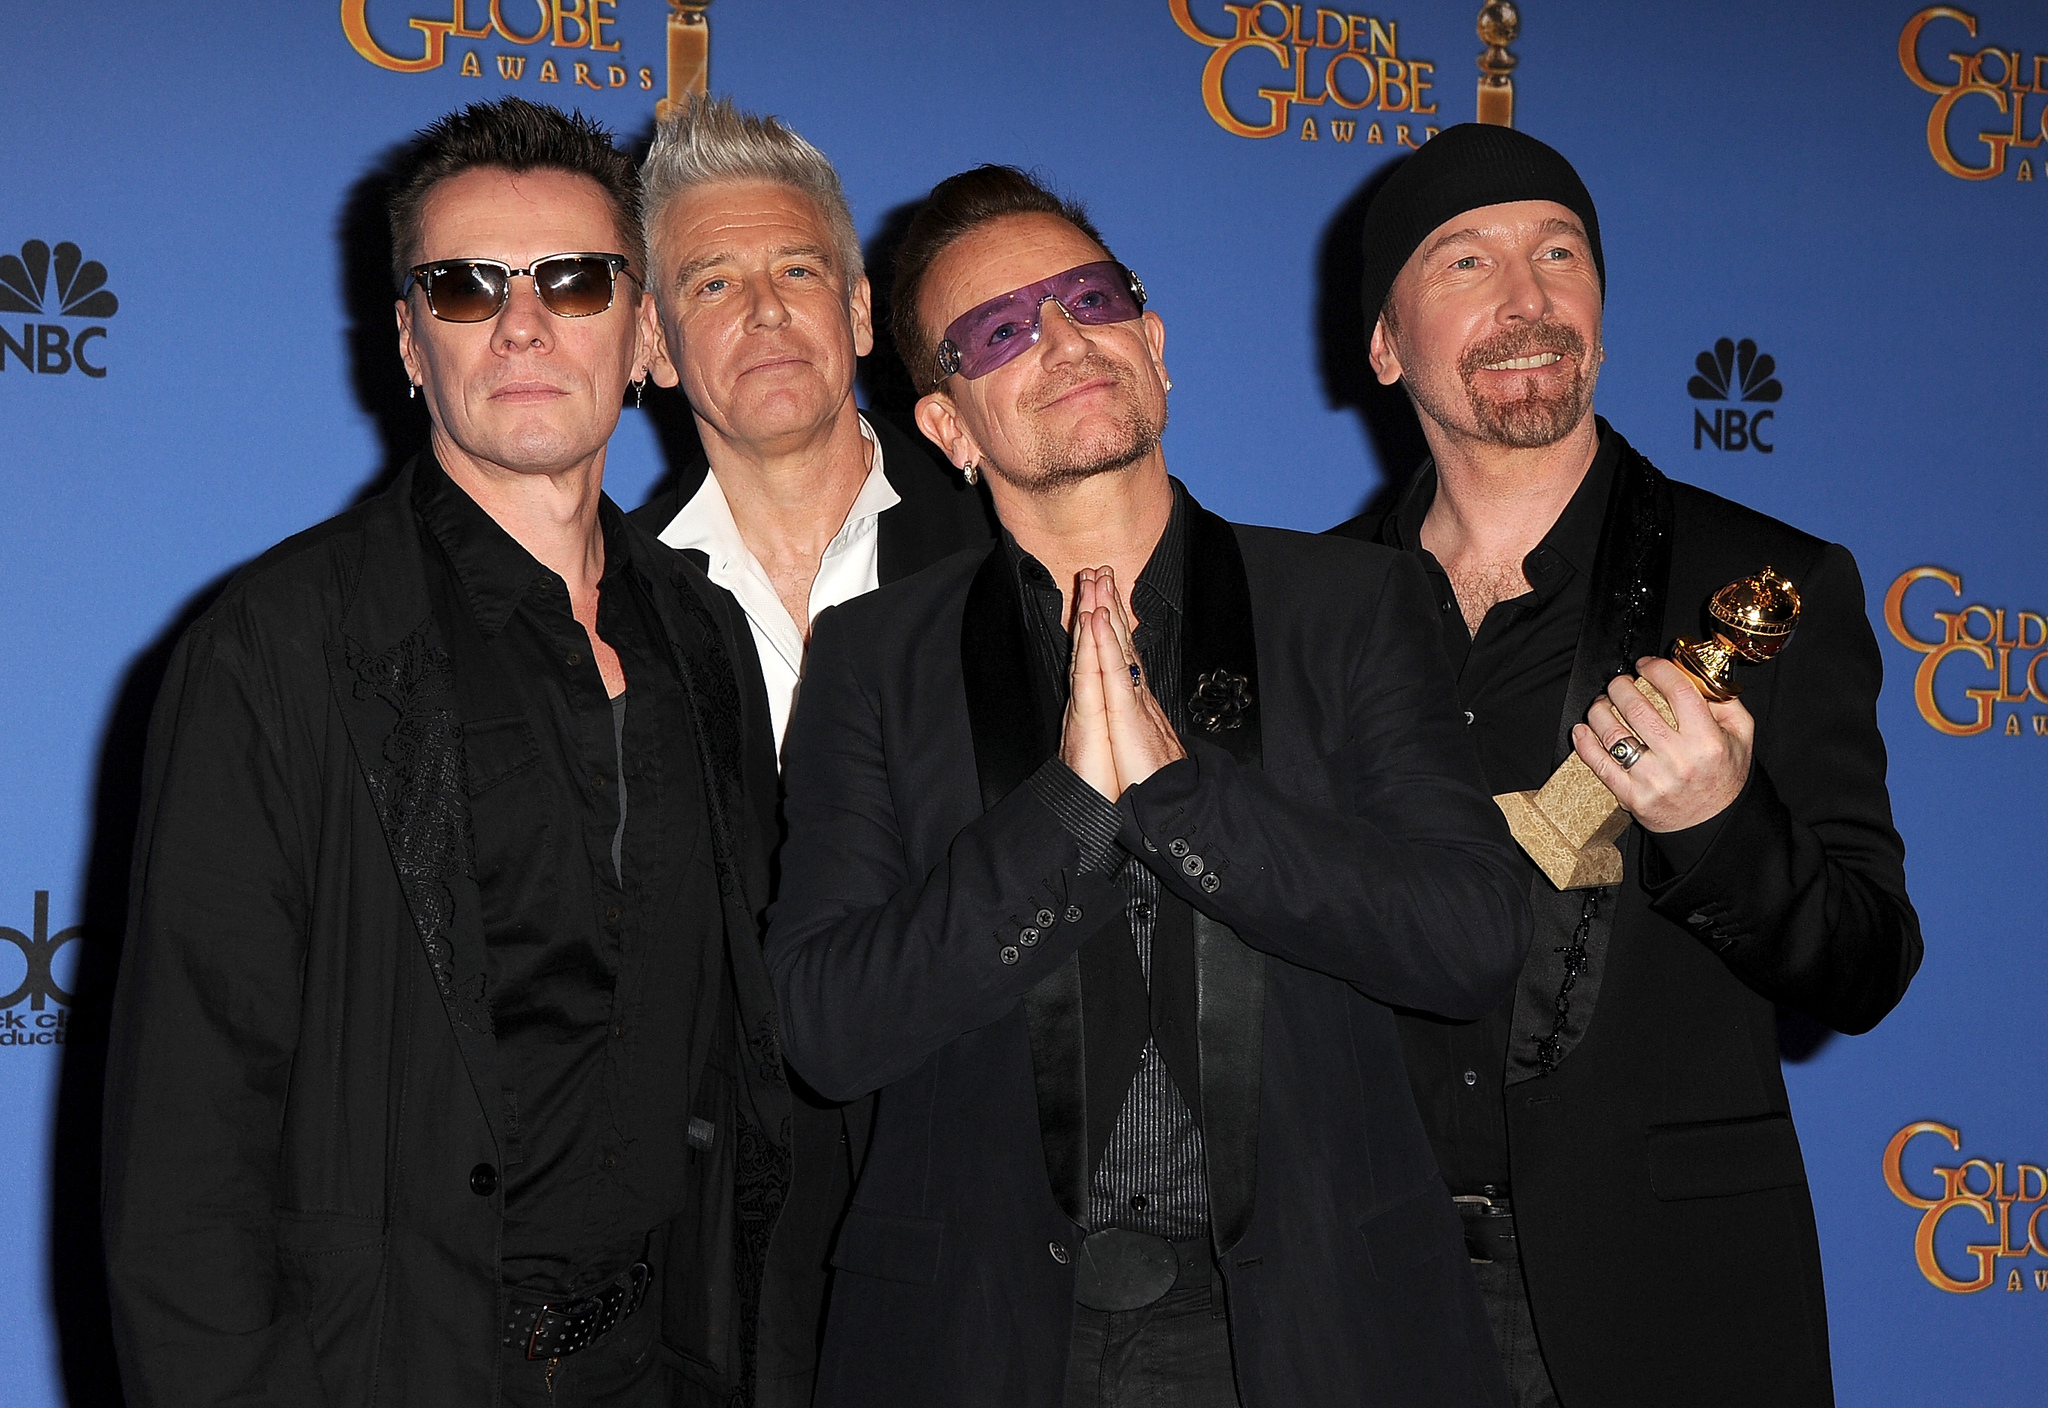 Bono, Adam Clayton, Larry Mullen Jr., The Edge and U2